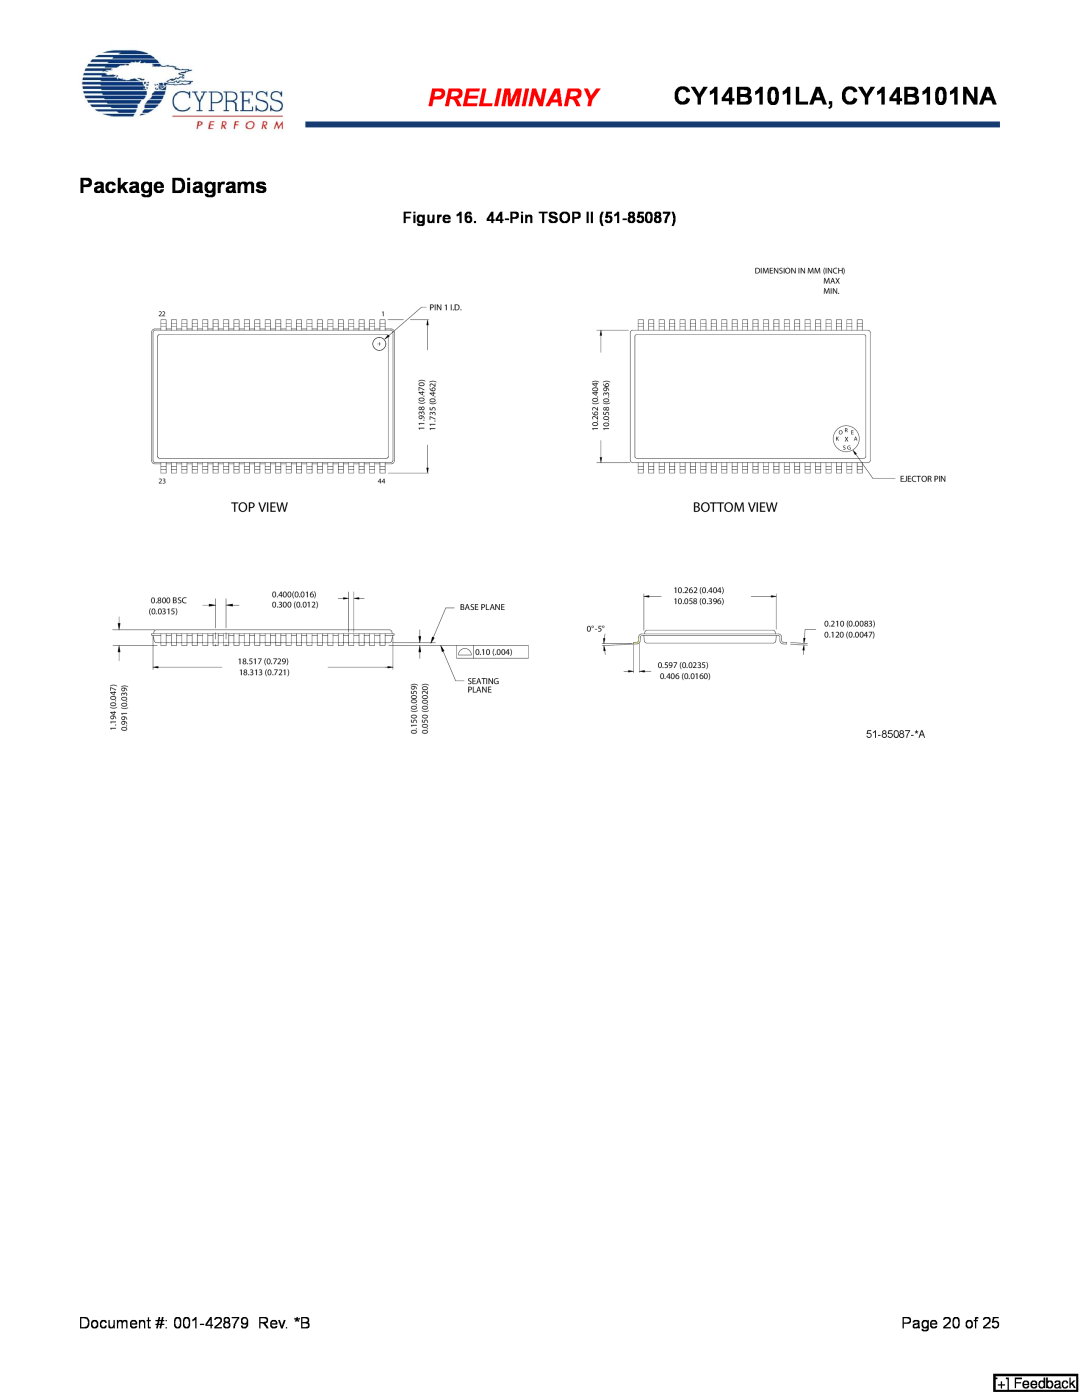 Cypress manual Package Diagrams, PRELIMINARY CY14B101LA, CY14B101NA, 44-Pin TSOP II, + Feedback 